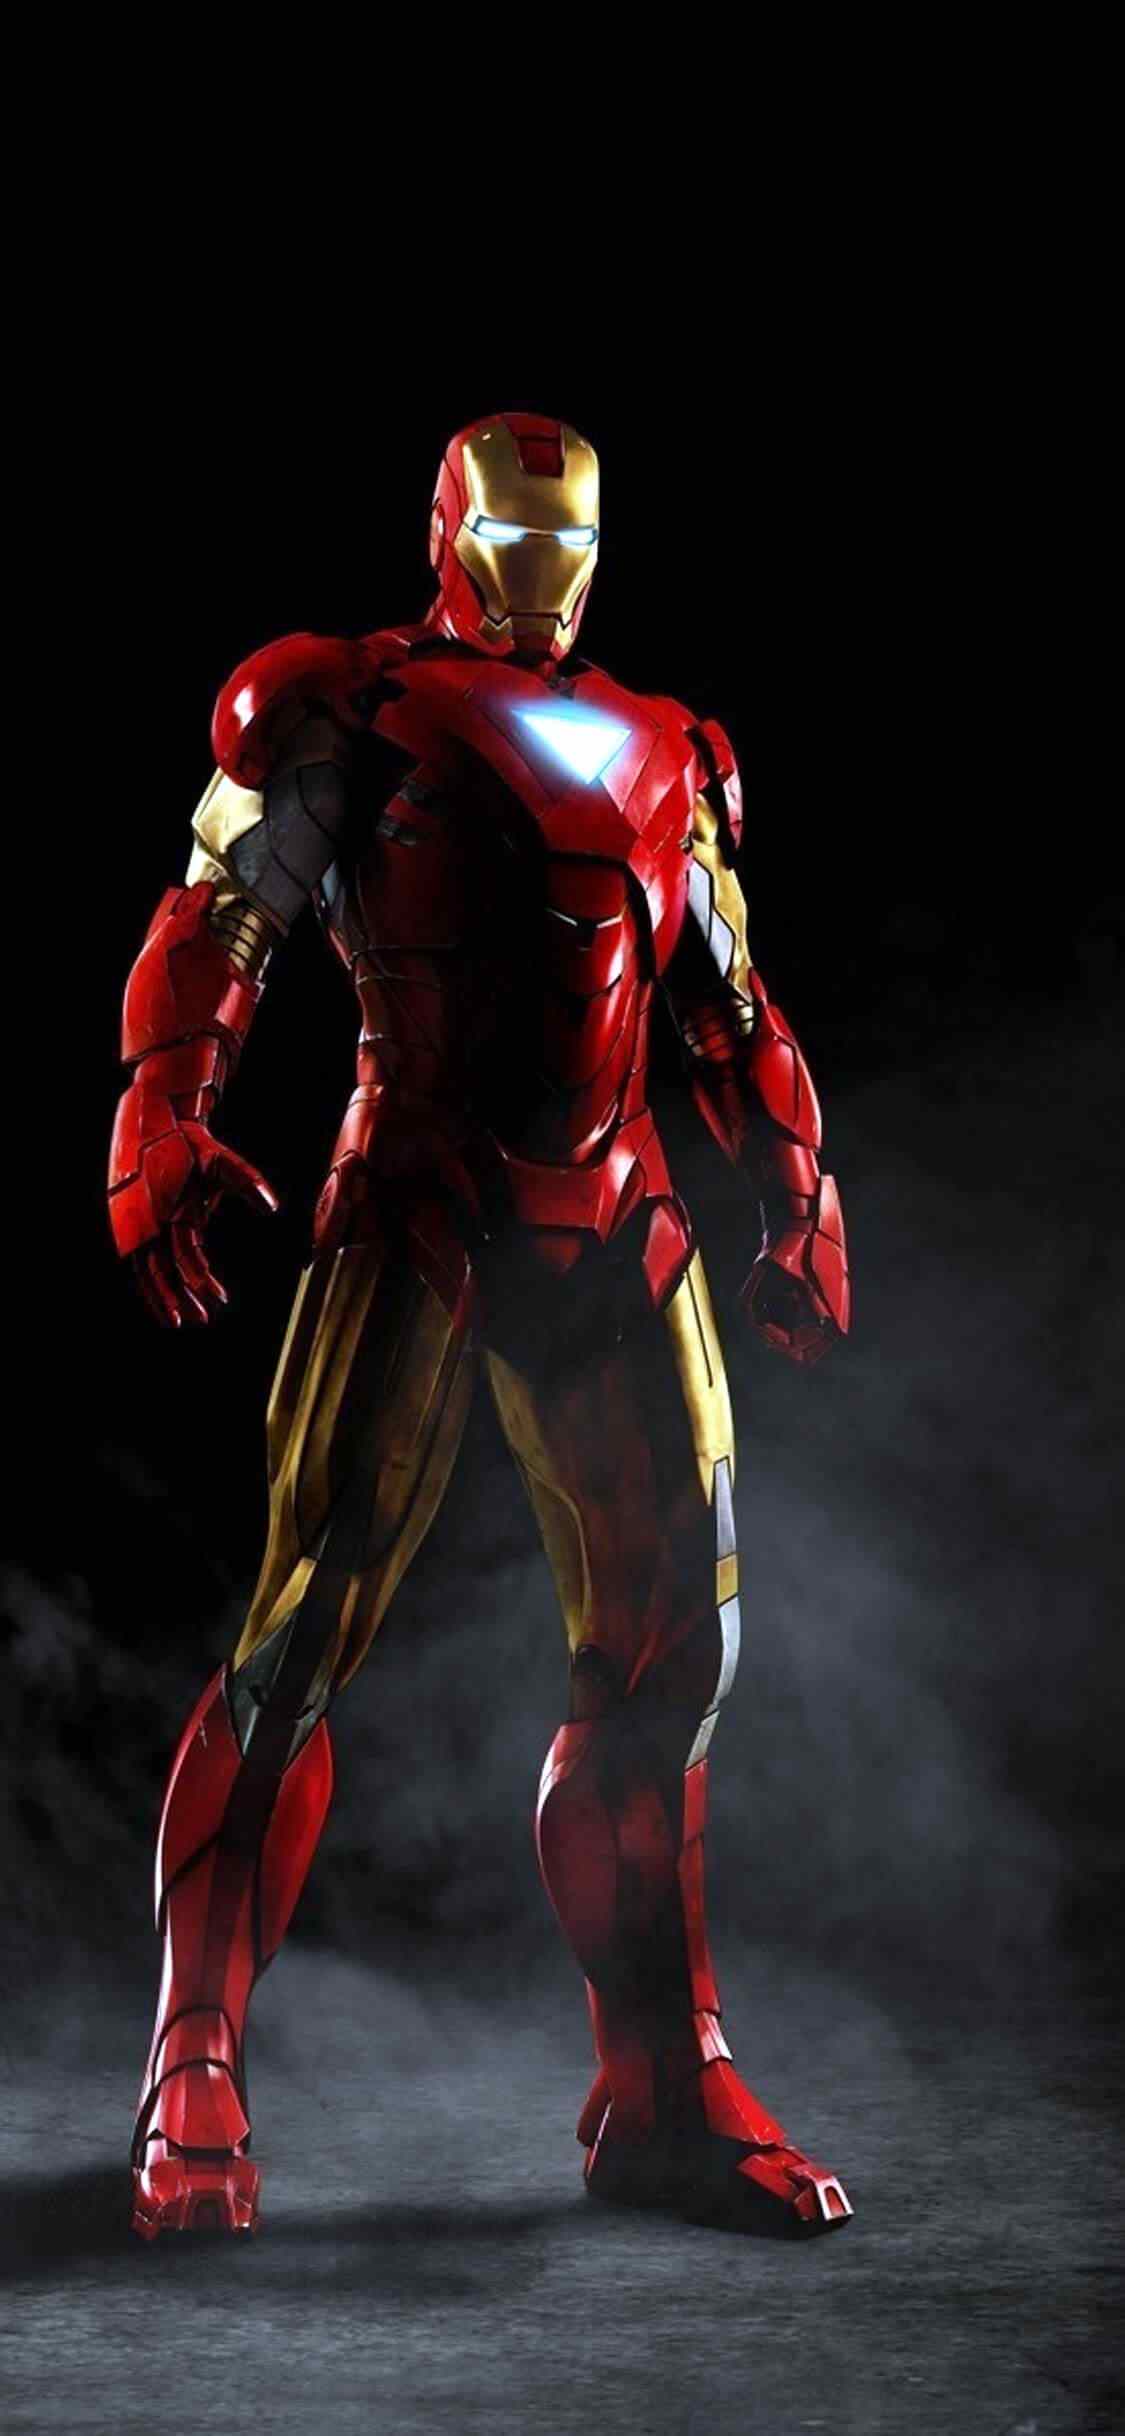 Black Iron Man HD Wallpaper For Mobile